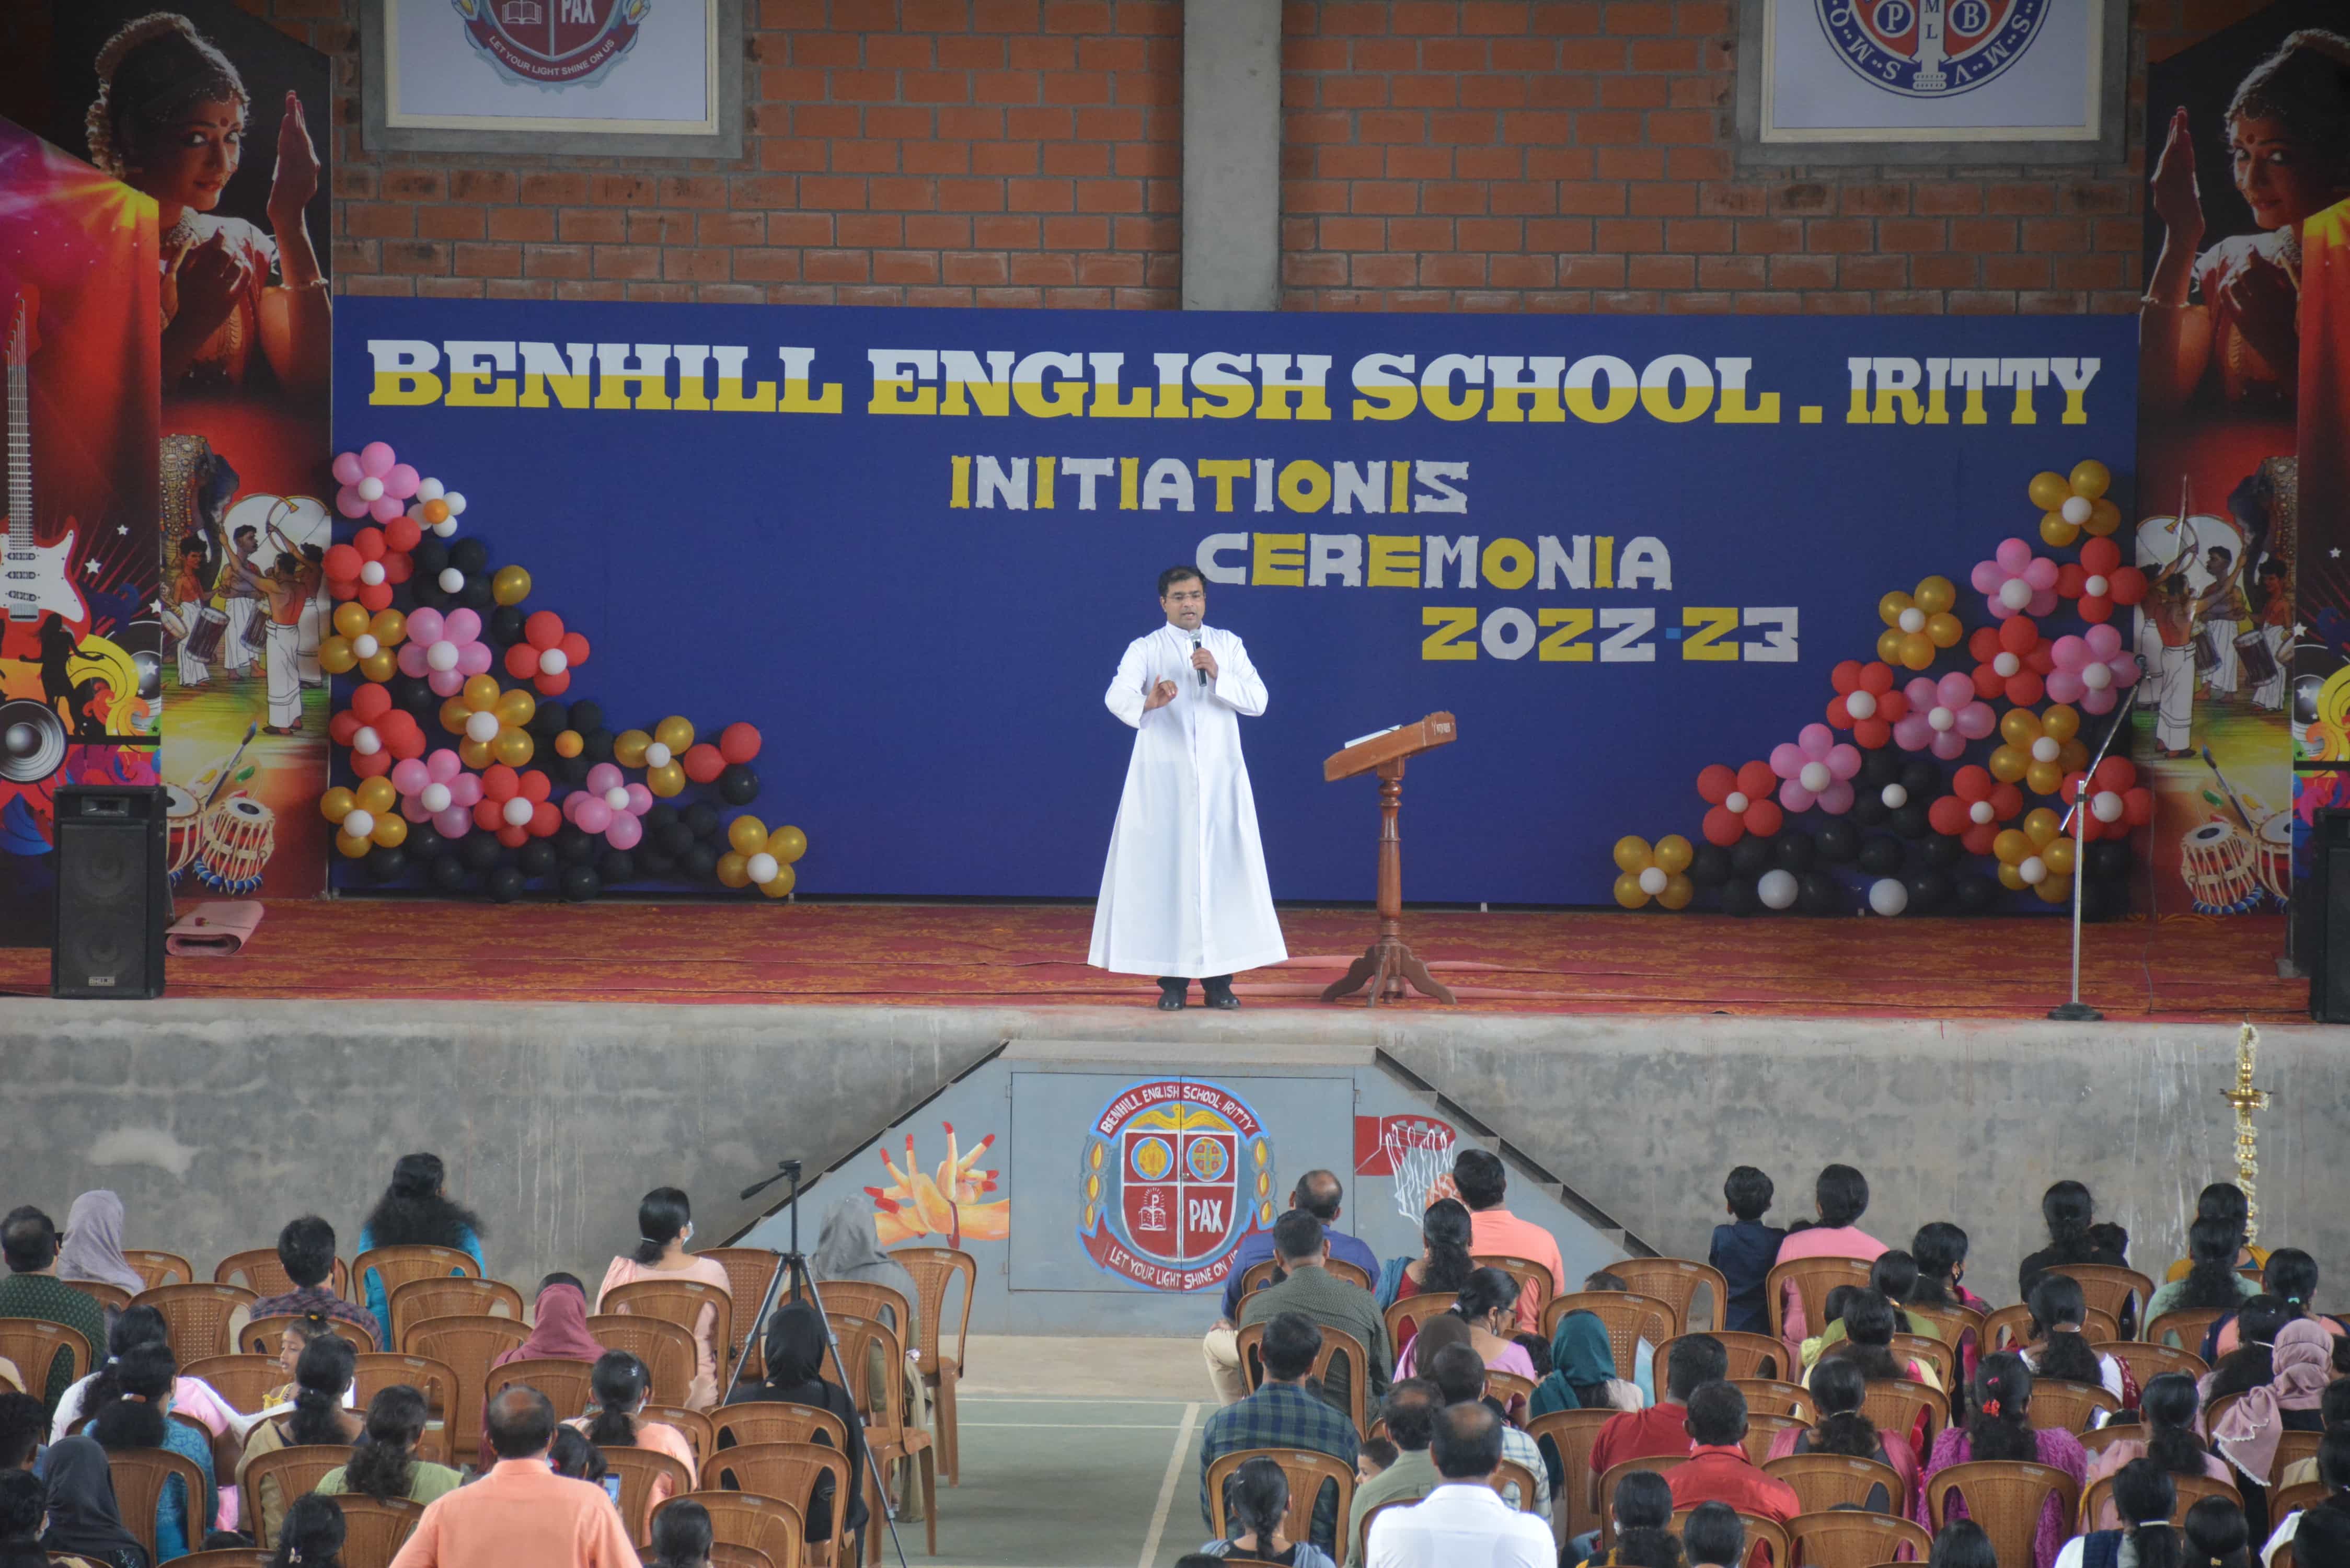 lkg initiation 2022-23 celebration at benhill school iritty